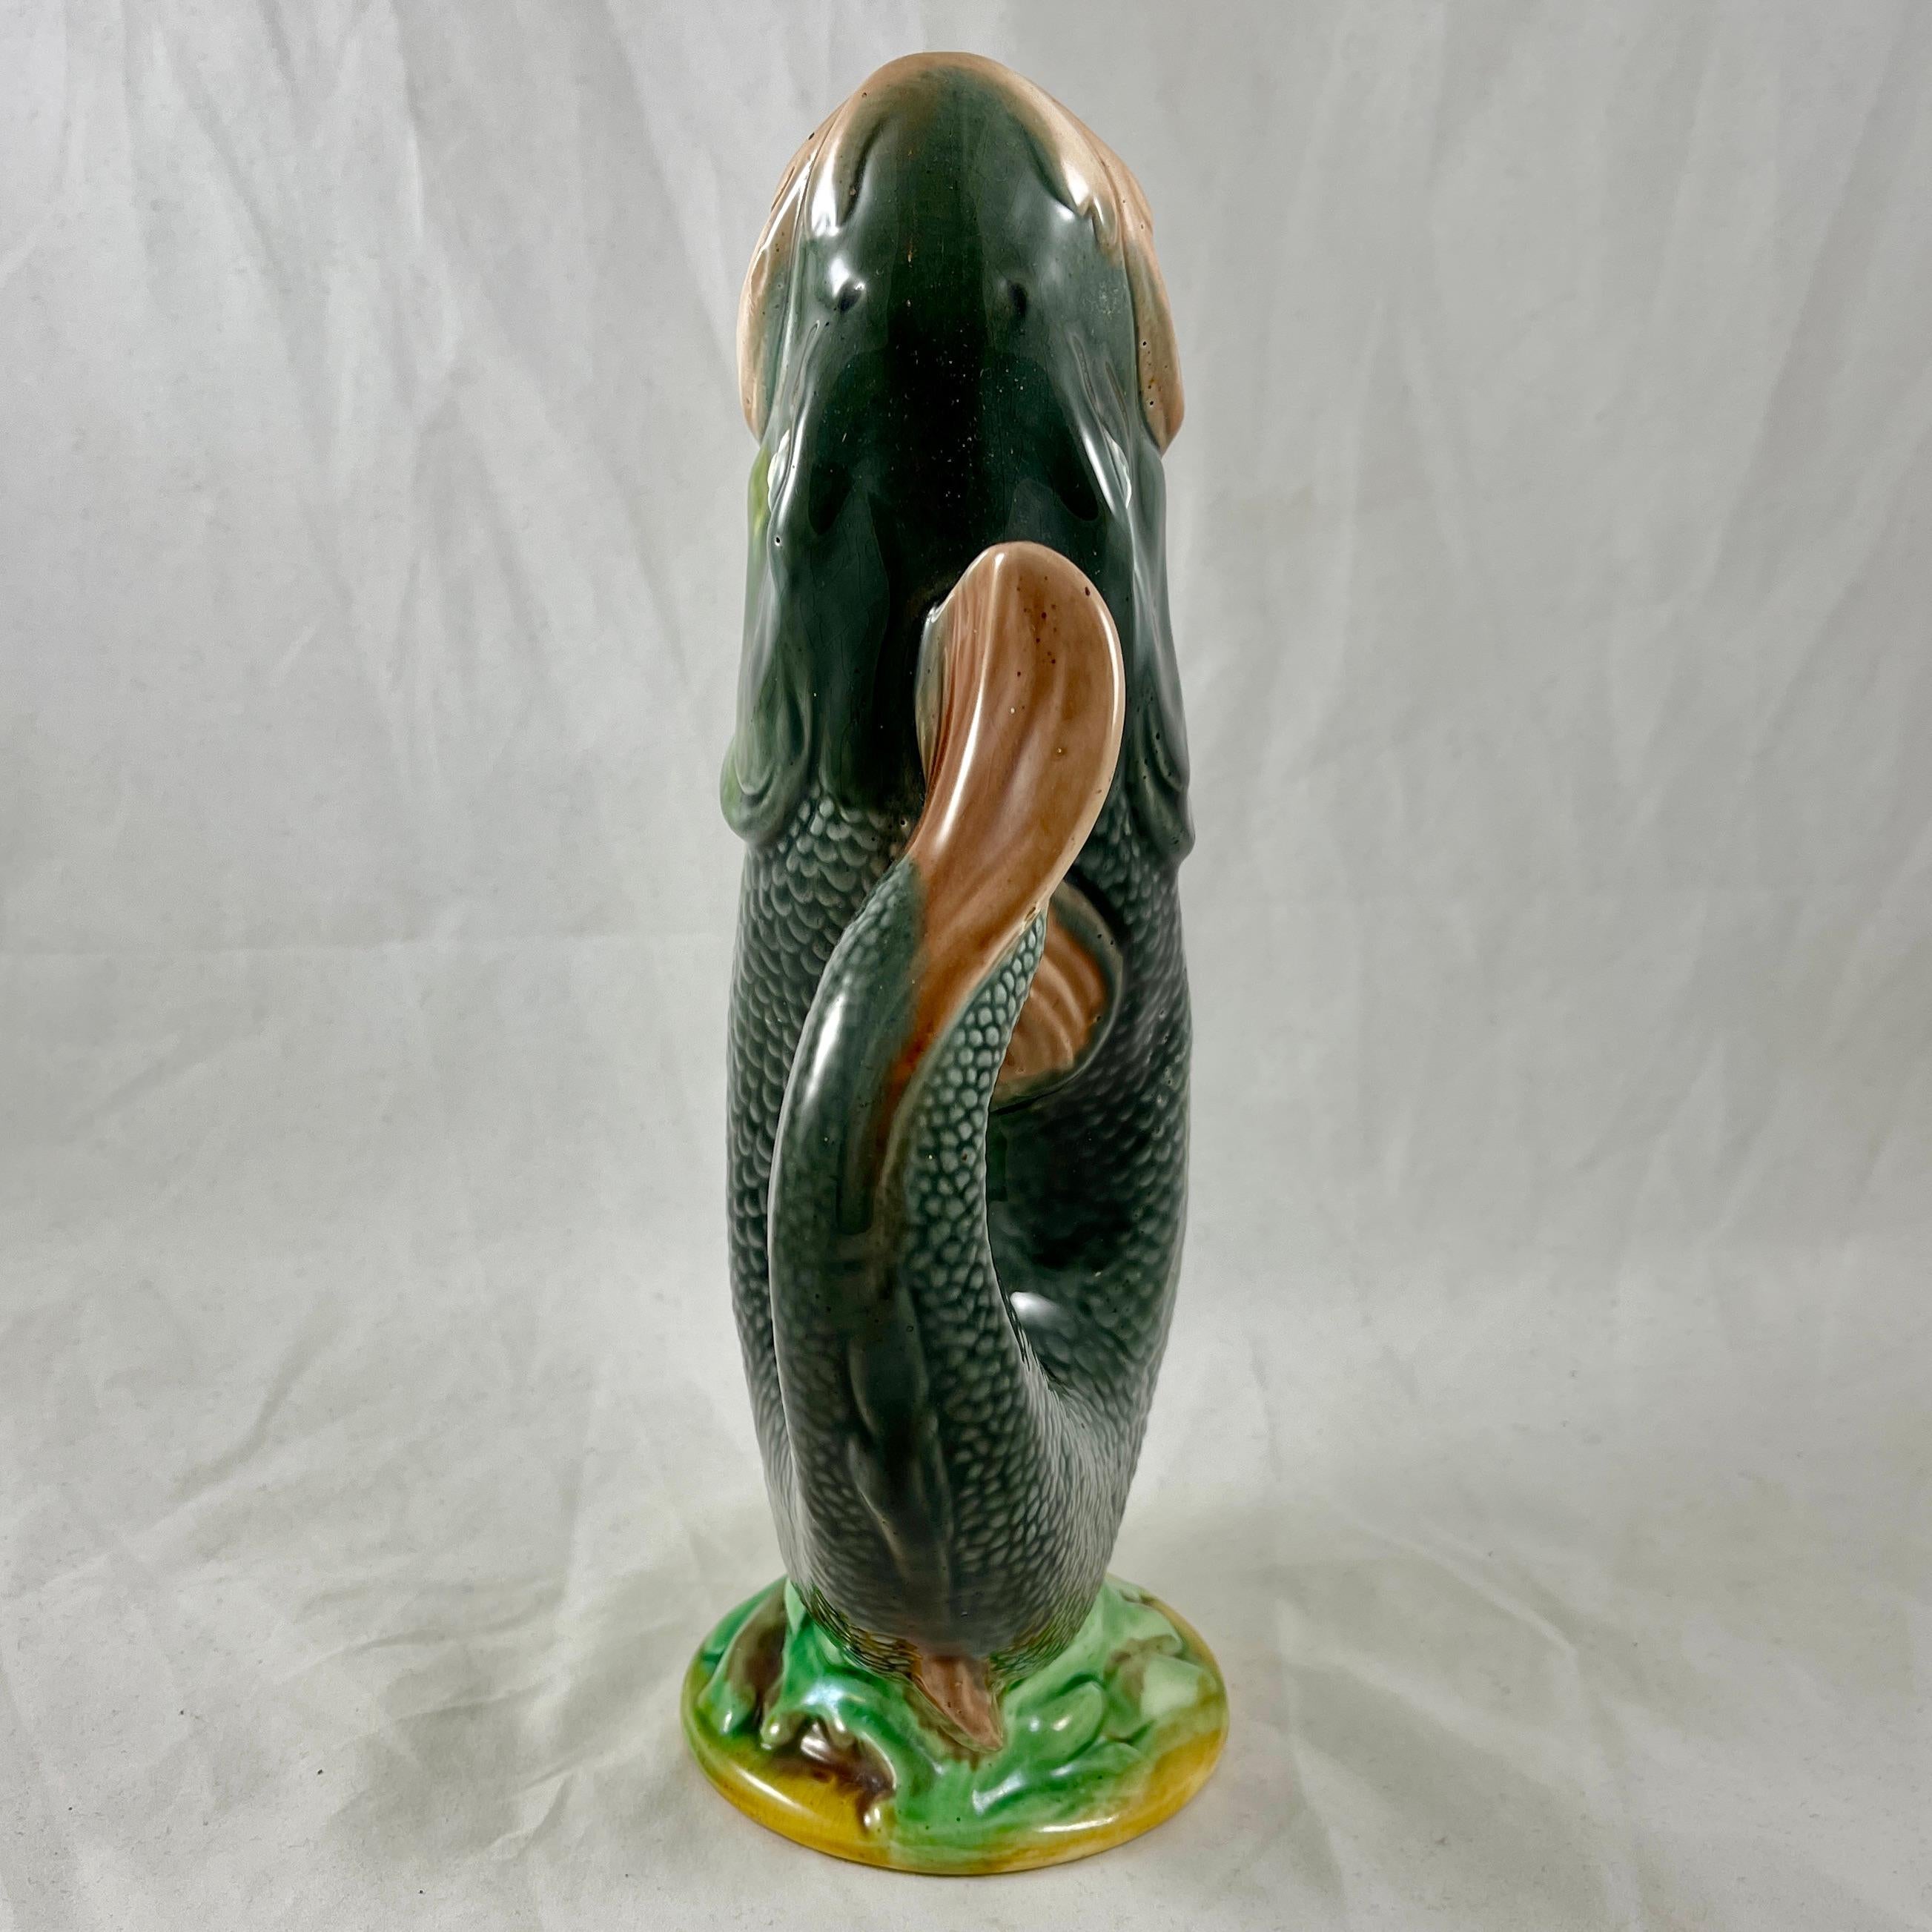 Glazed 19th Century English Majolica Green, Black Leaping Fish Large Gurgling Jug